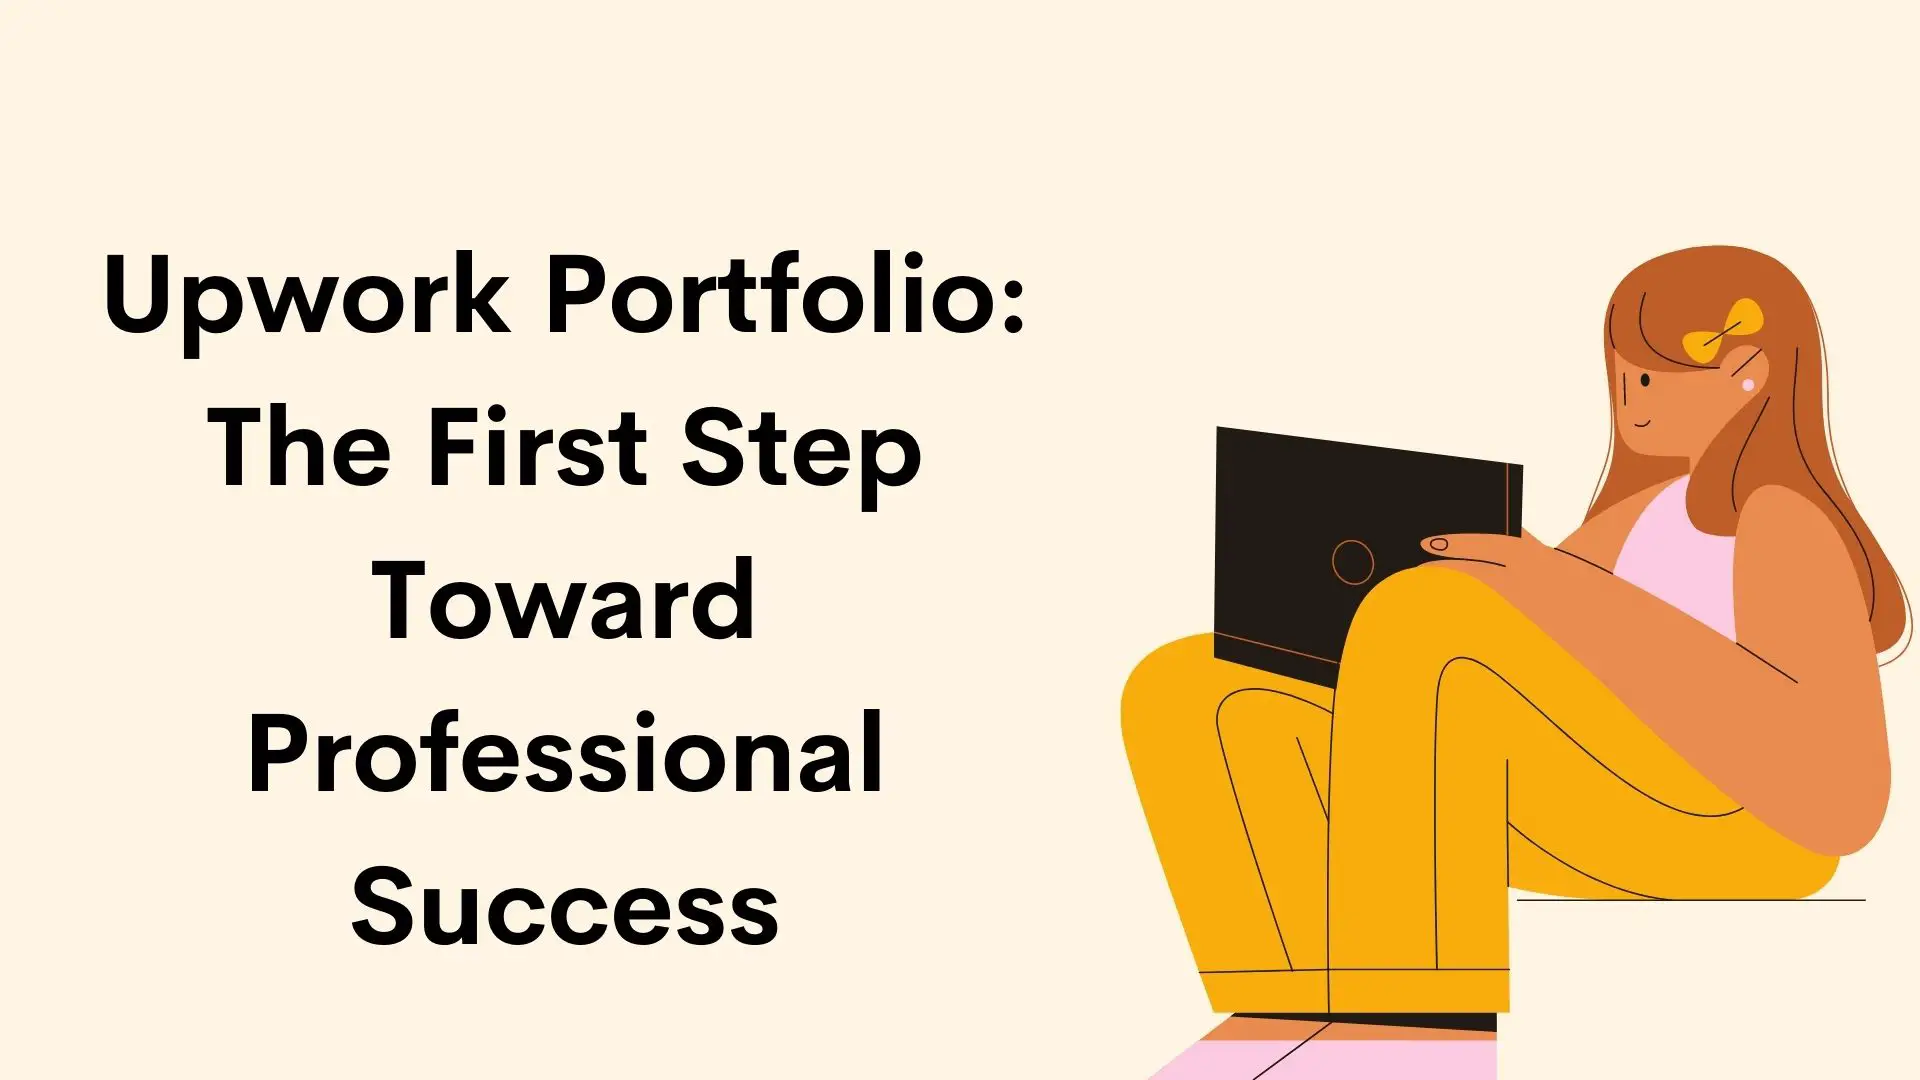 Upwork Portfolio: The First Step Toward Professional Success